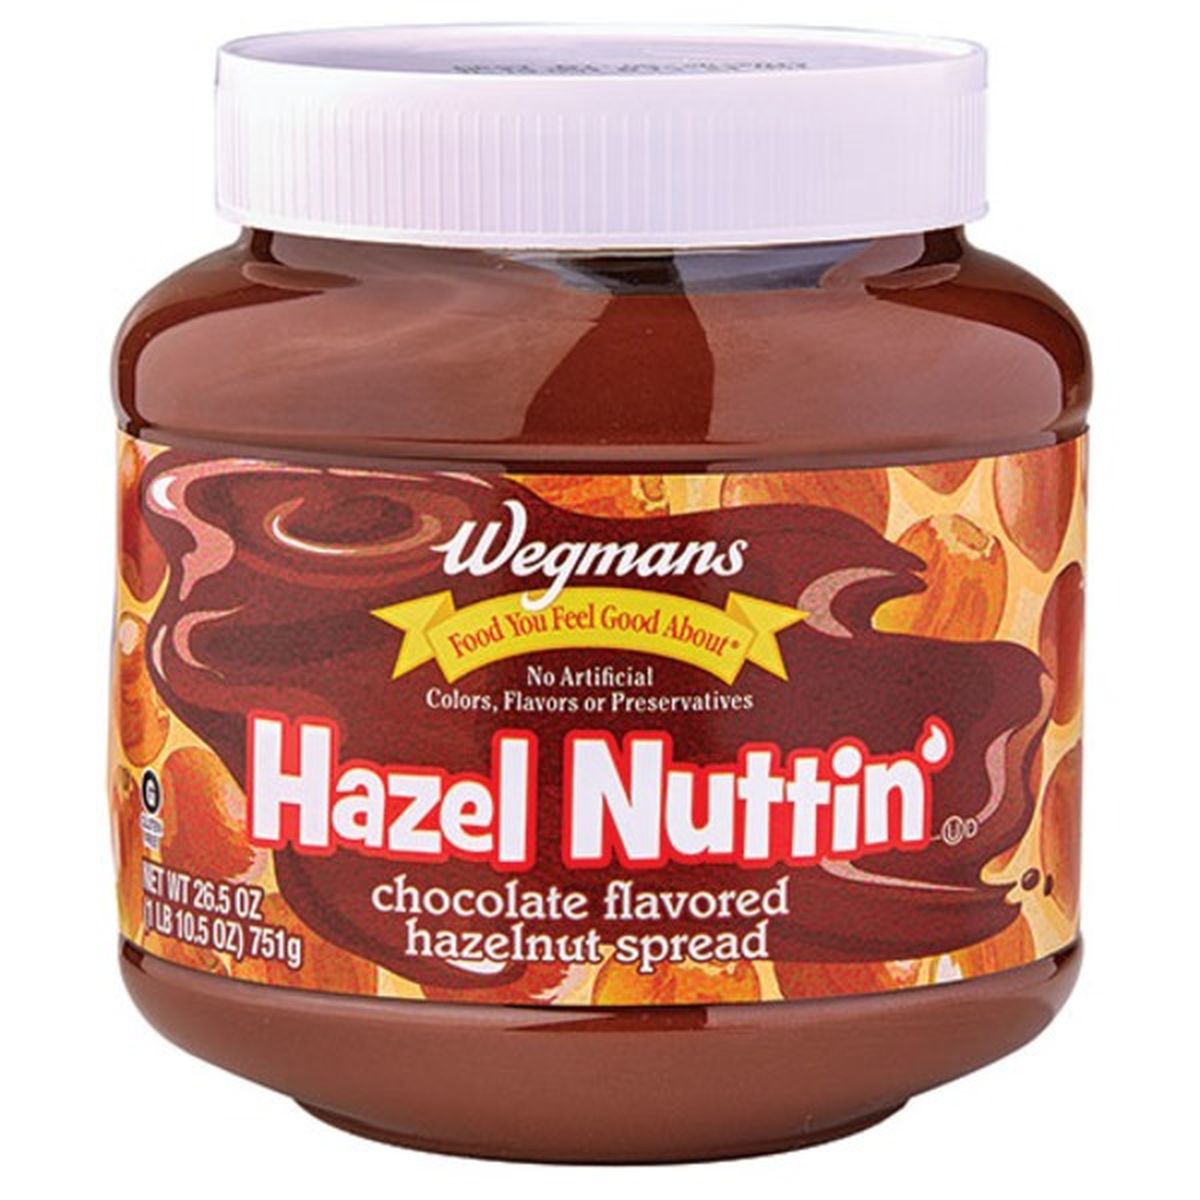 Calories in Wegmans Hazel Nuttin' Chocolate Flavored Hazelnut Spread